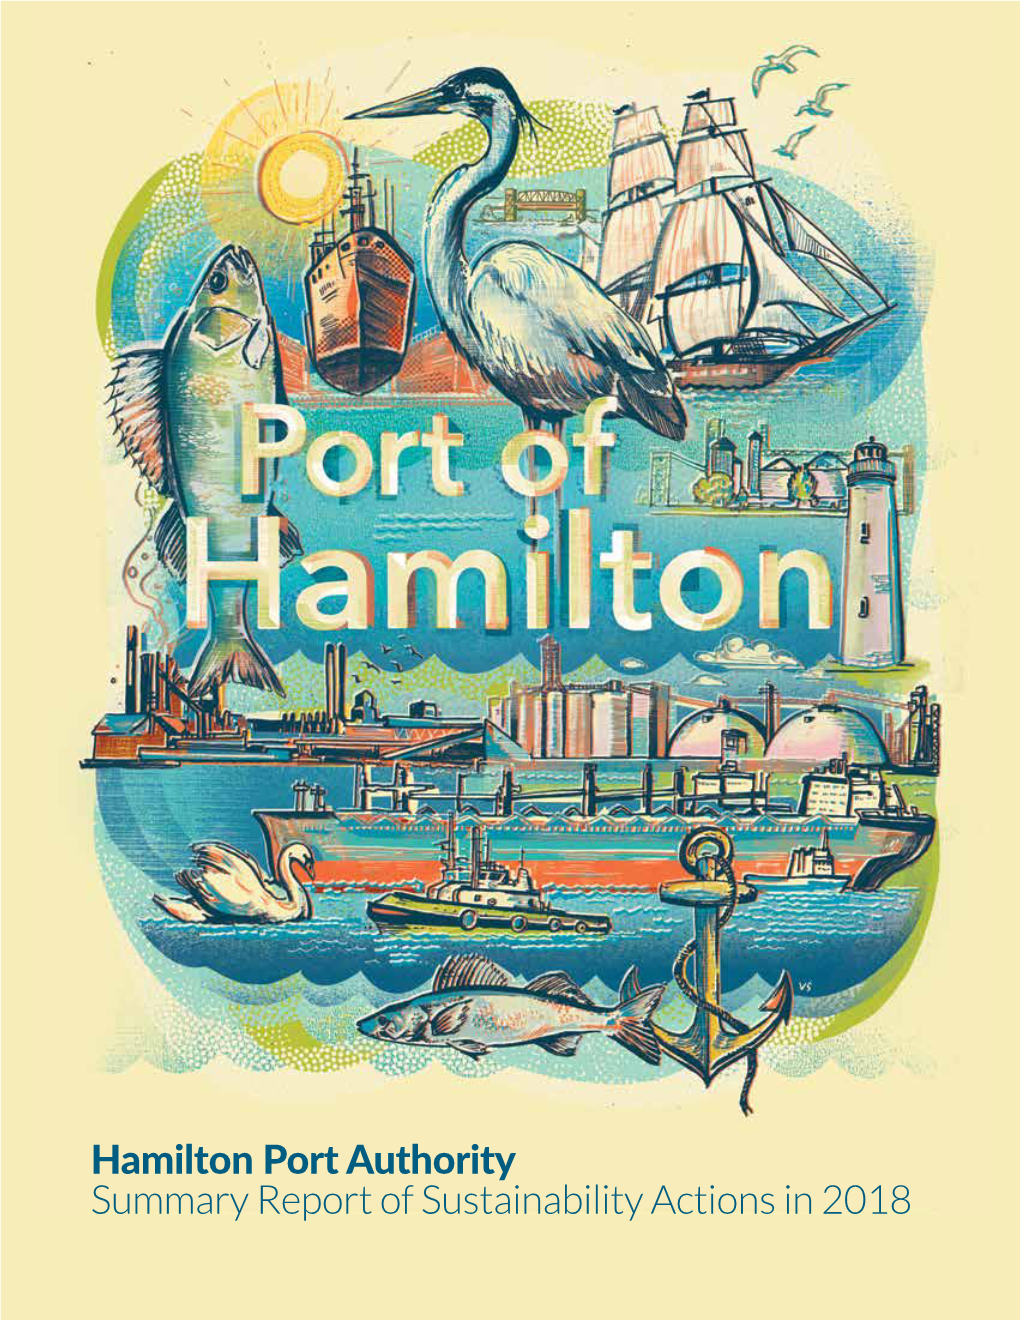 Hamilton Port Authority Sustainability Report 2018